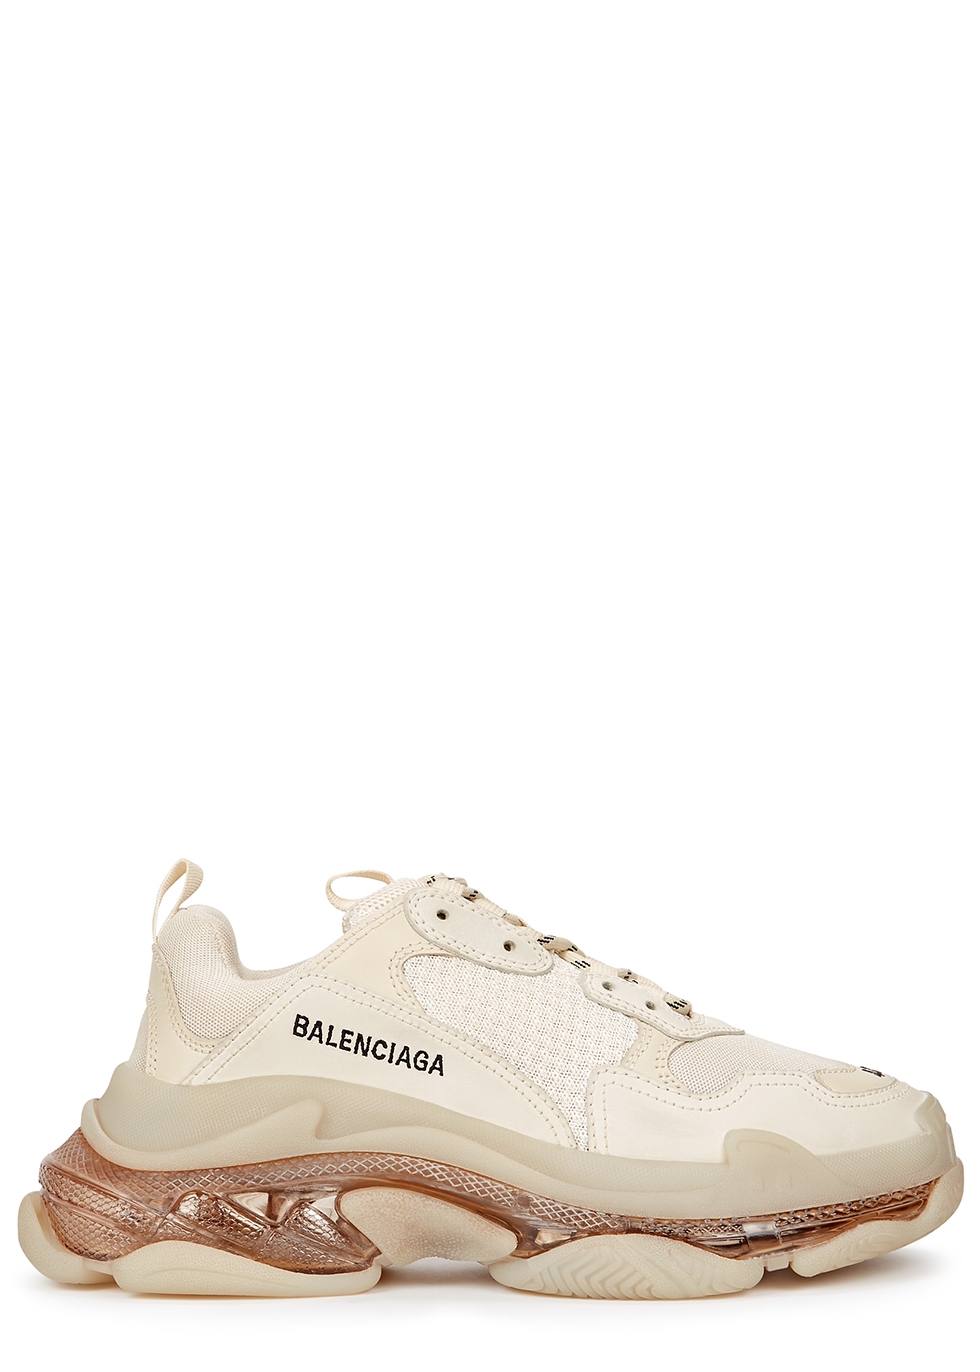 Balenciaga White Triple S Clear Sole Sneakers in 2019